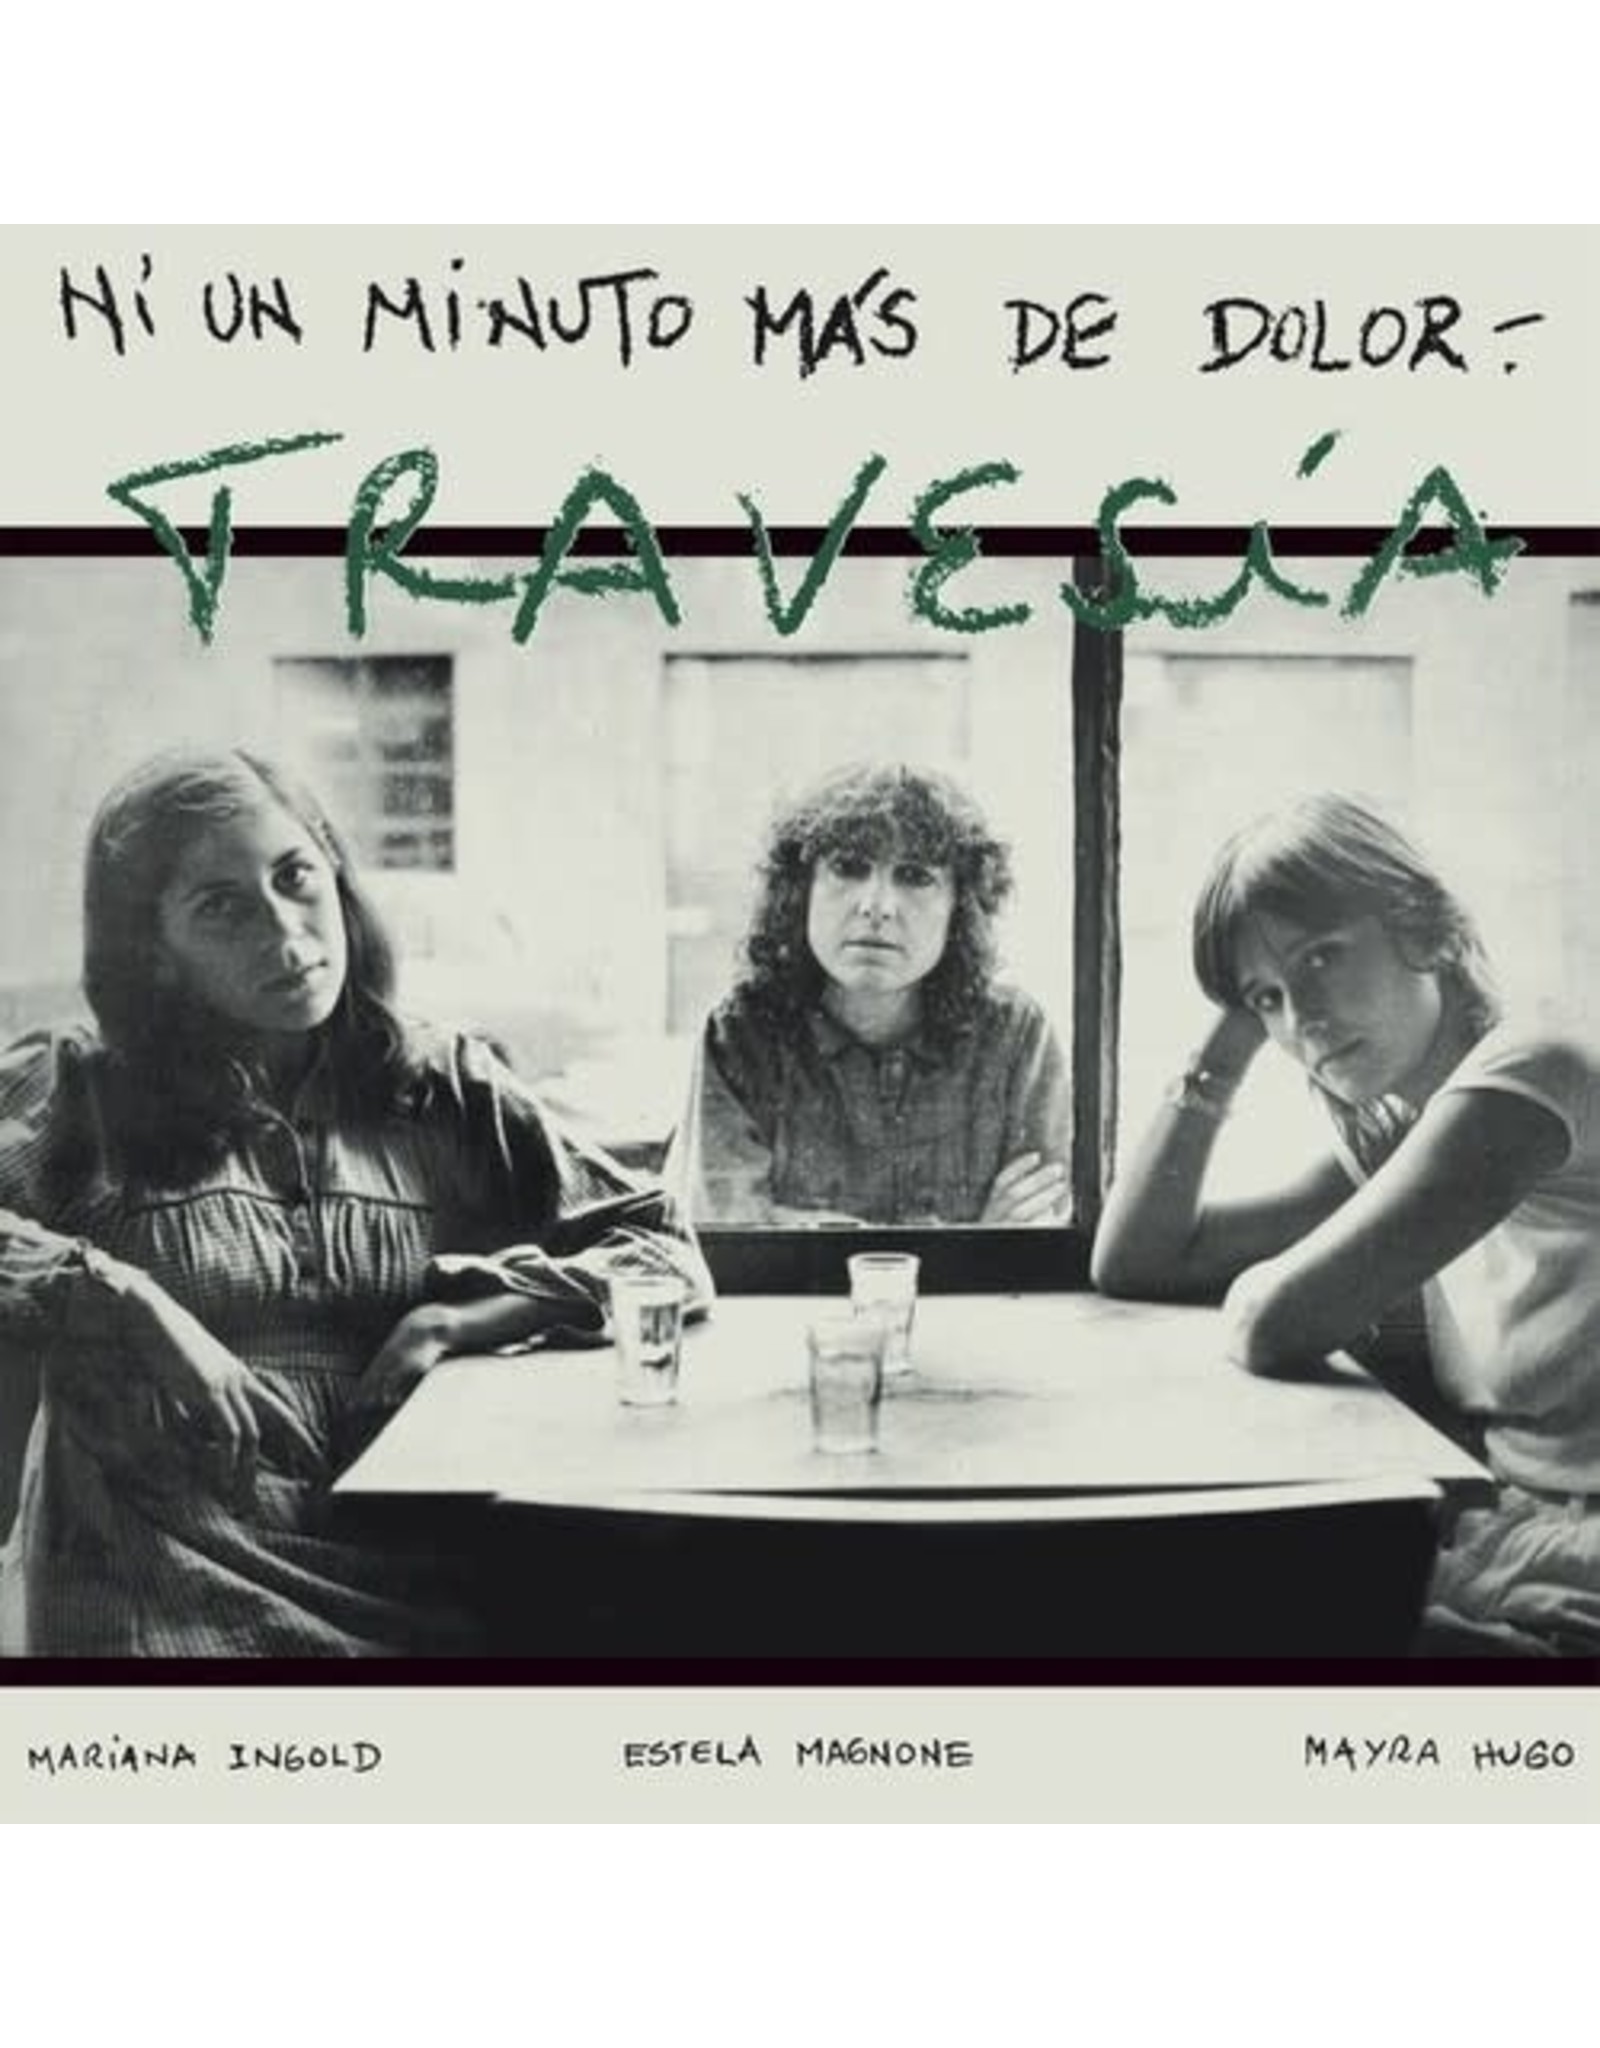 New Vinyl Travesia - Ni Un Minuto Mas de Dolor LP